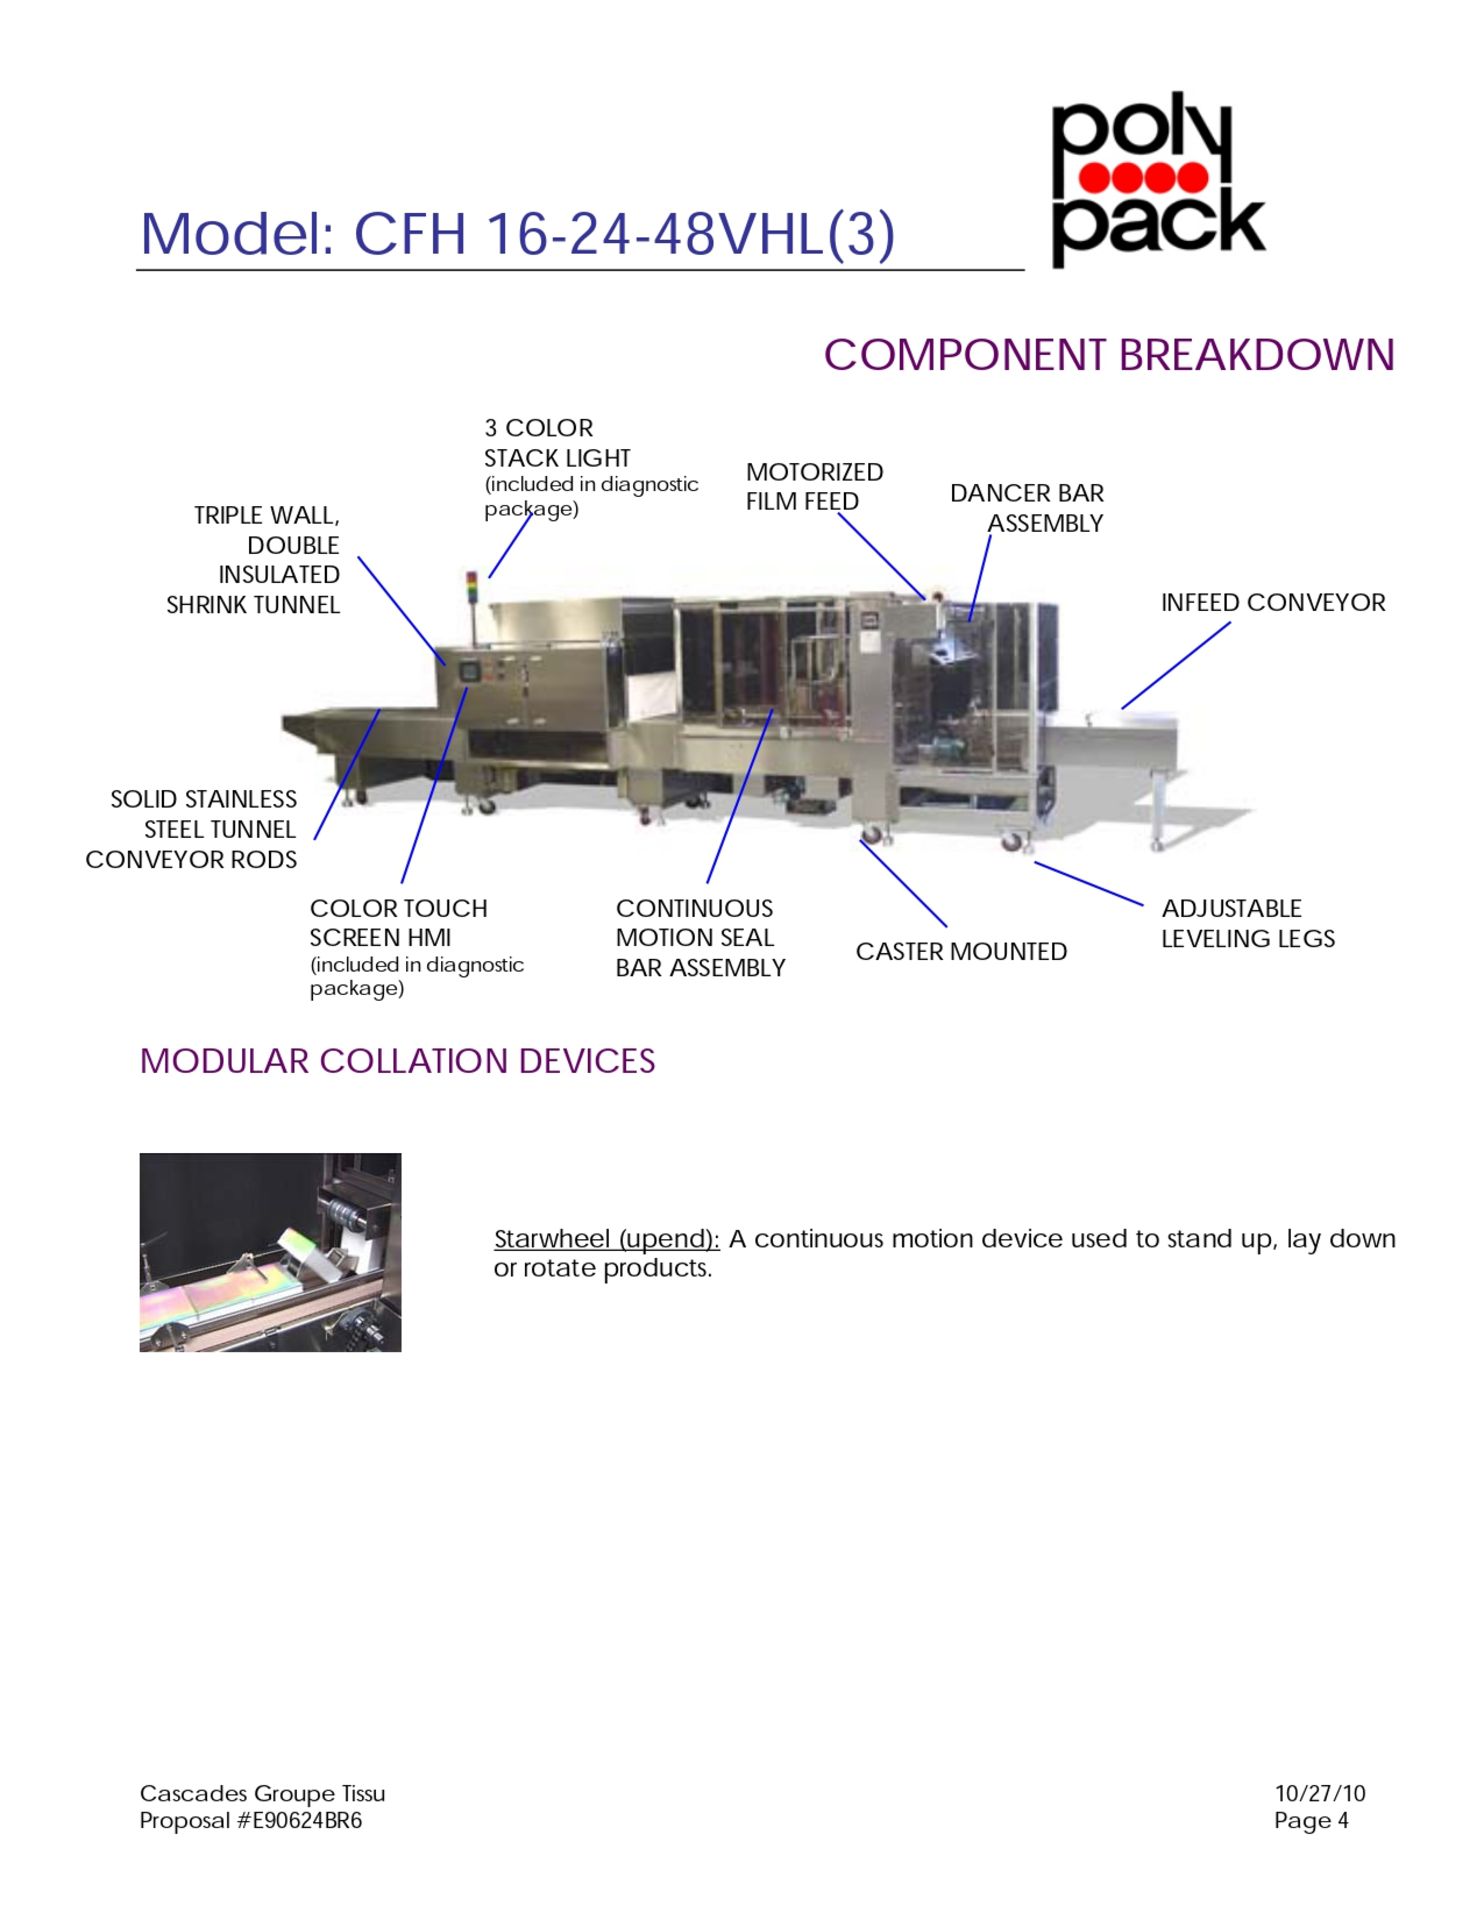 2010 SHRINK WRAPPER FULLY AUTOMATIC, BRAND: POLY PACK, MODEL CFH 16-24-48VHL(3), 600V, 40AMP, - Image 16 of 29